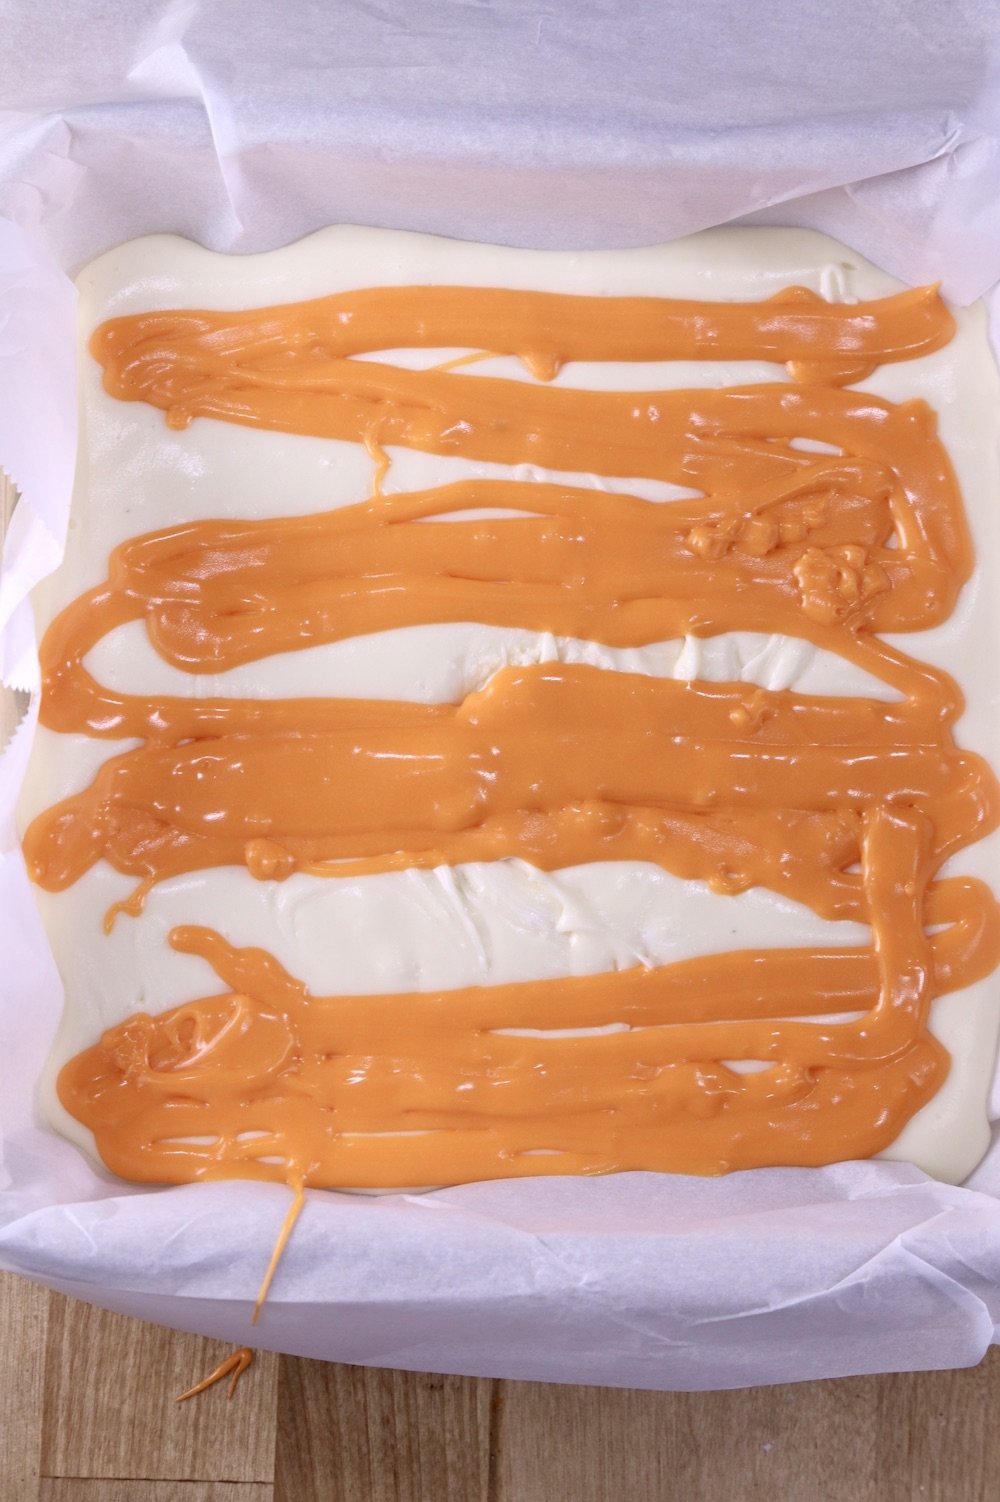 Pan of vanilla fudge with orange fudge drizzled over it